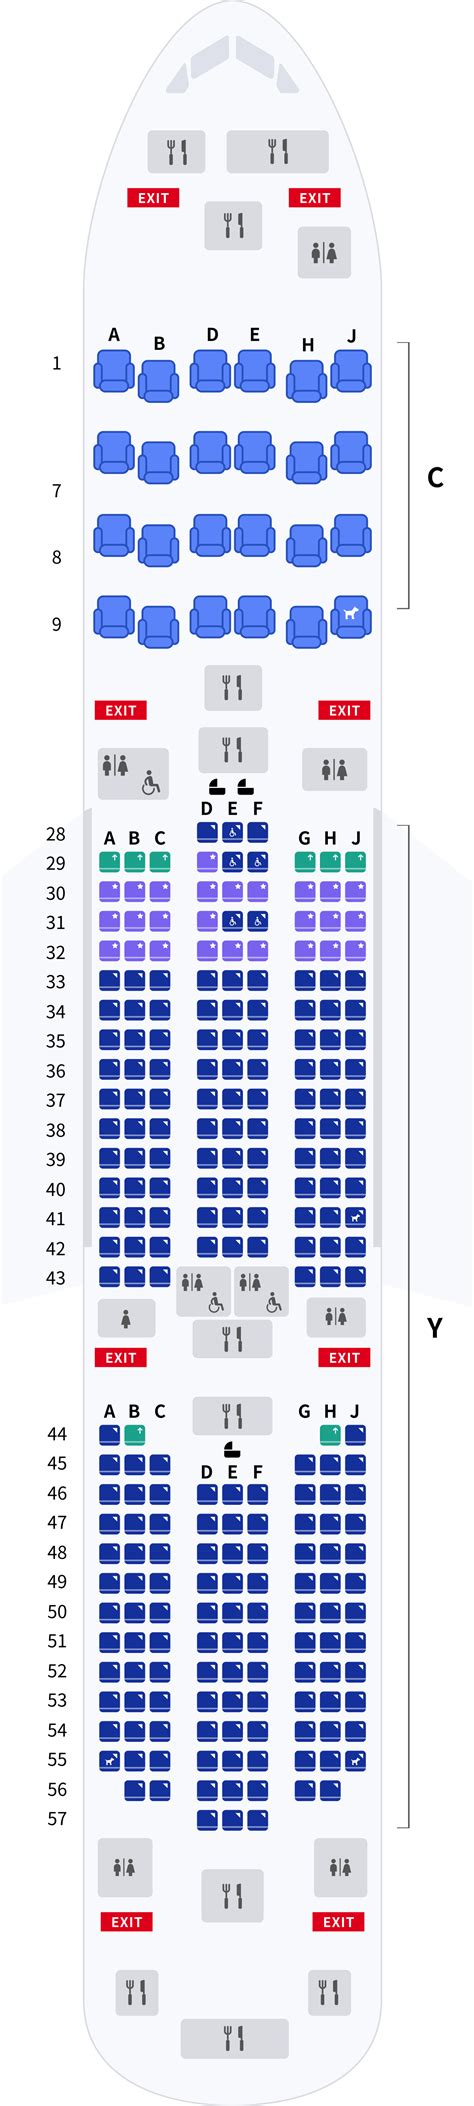 Seating Chart 787 9